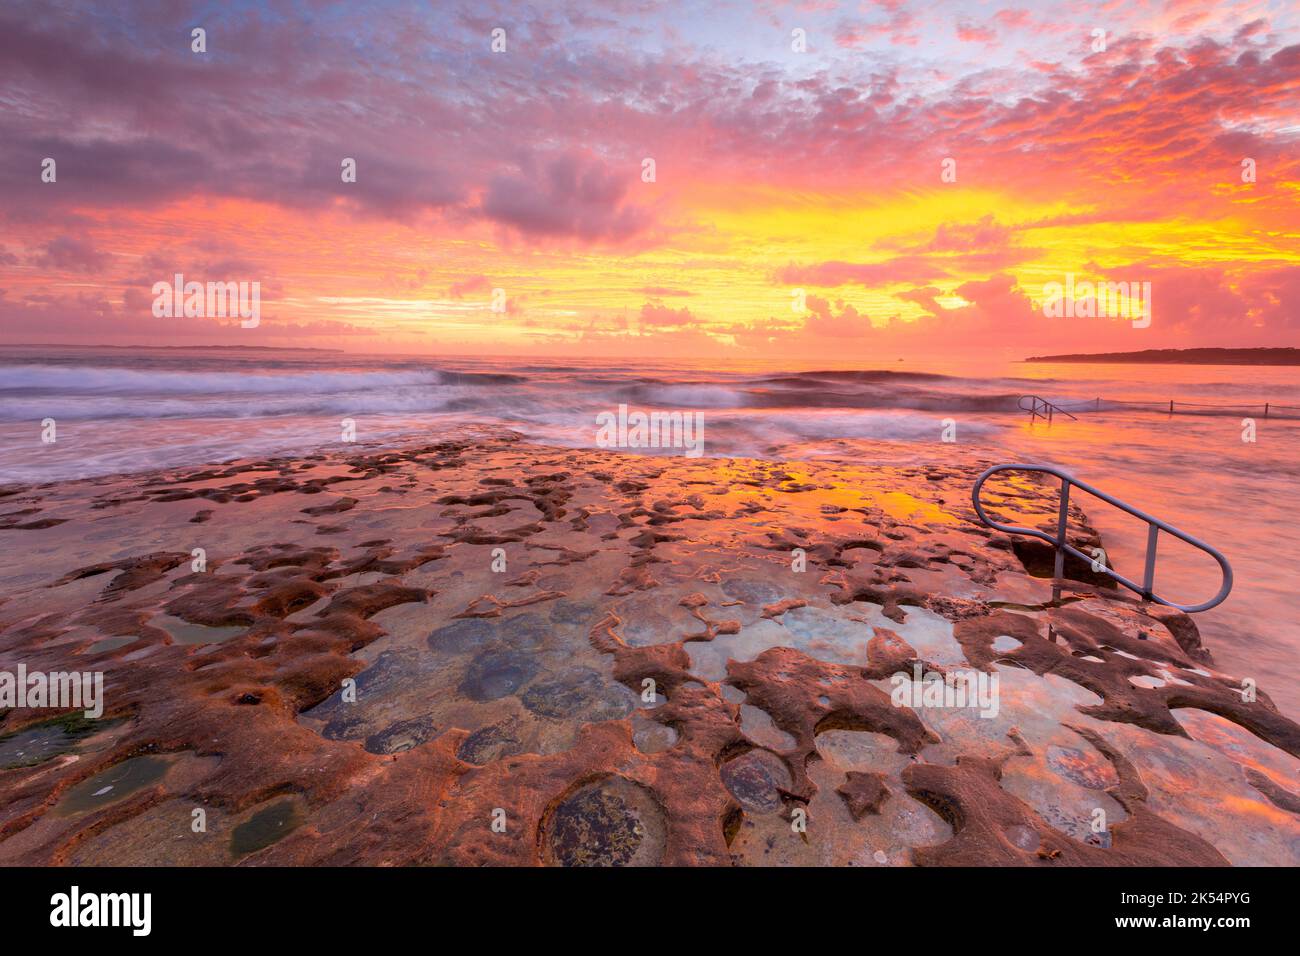 Incoming waves overflow onto the eroded rockshelf and rockpool  with amazing  sunrise sky full of colours Stock Photo